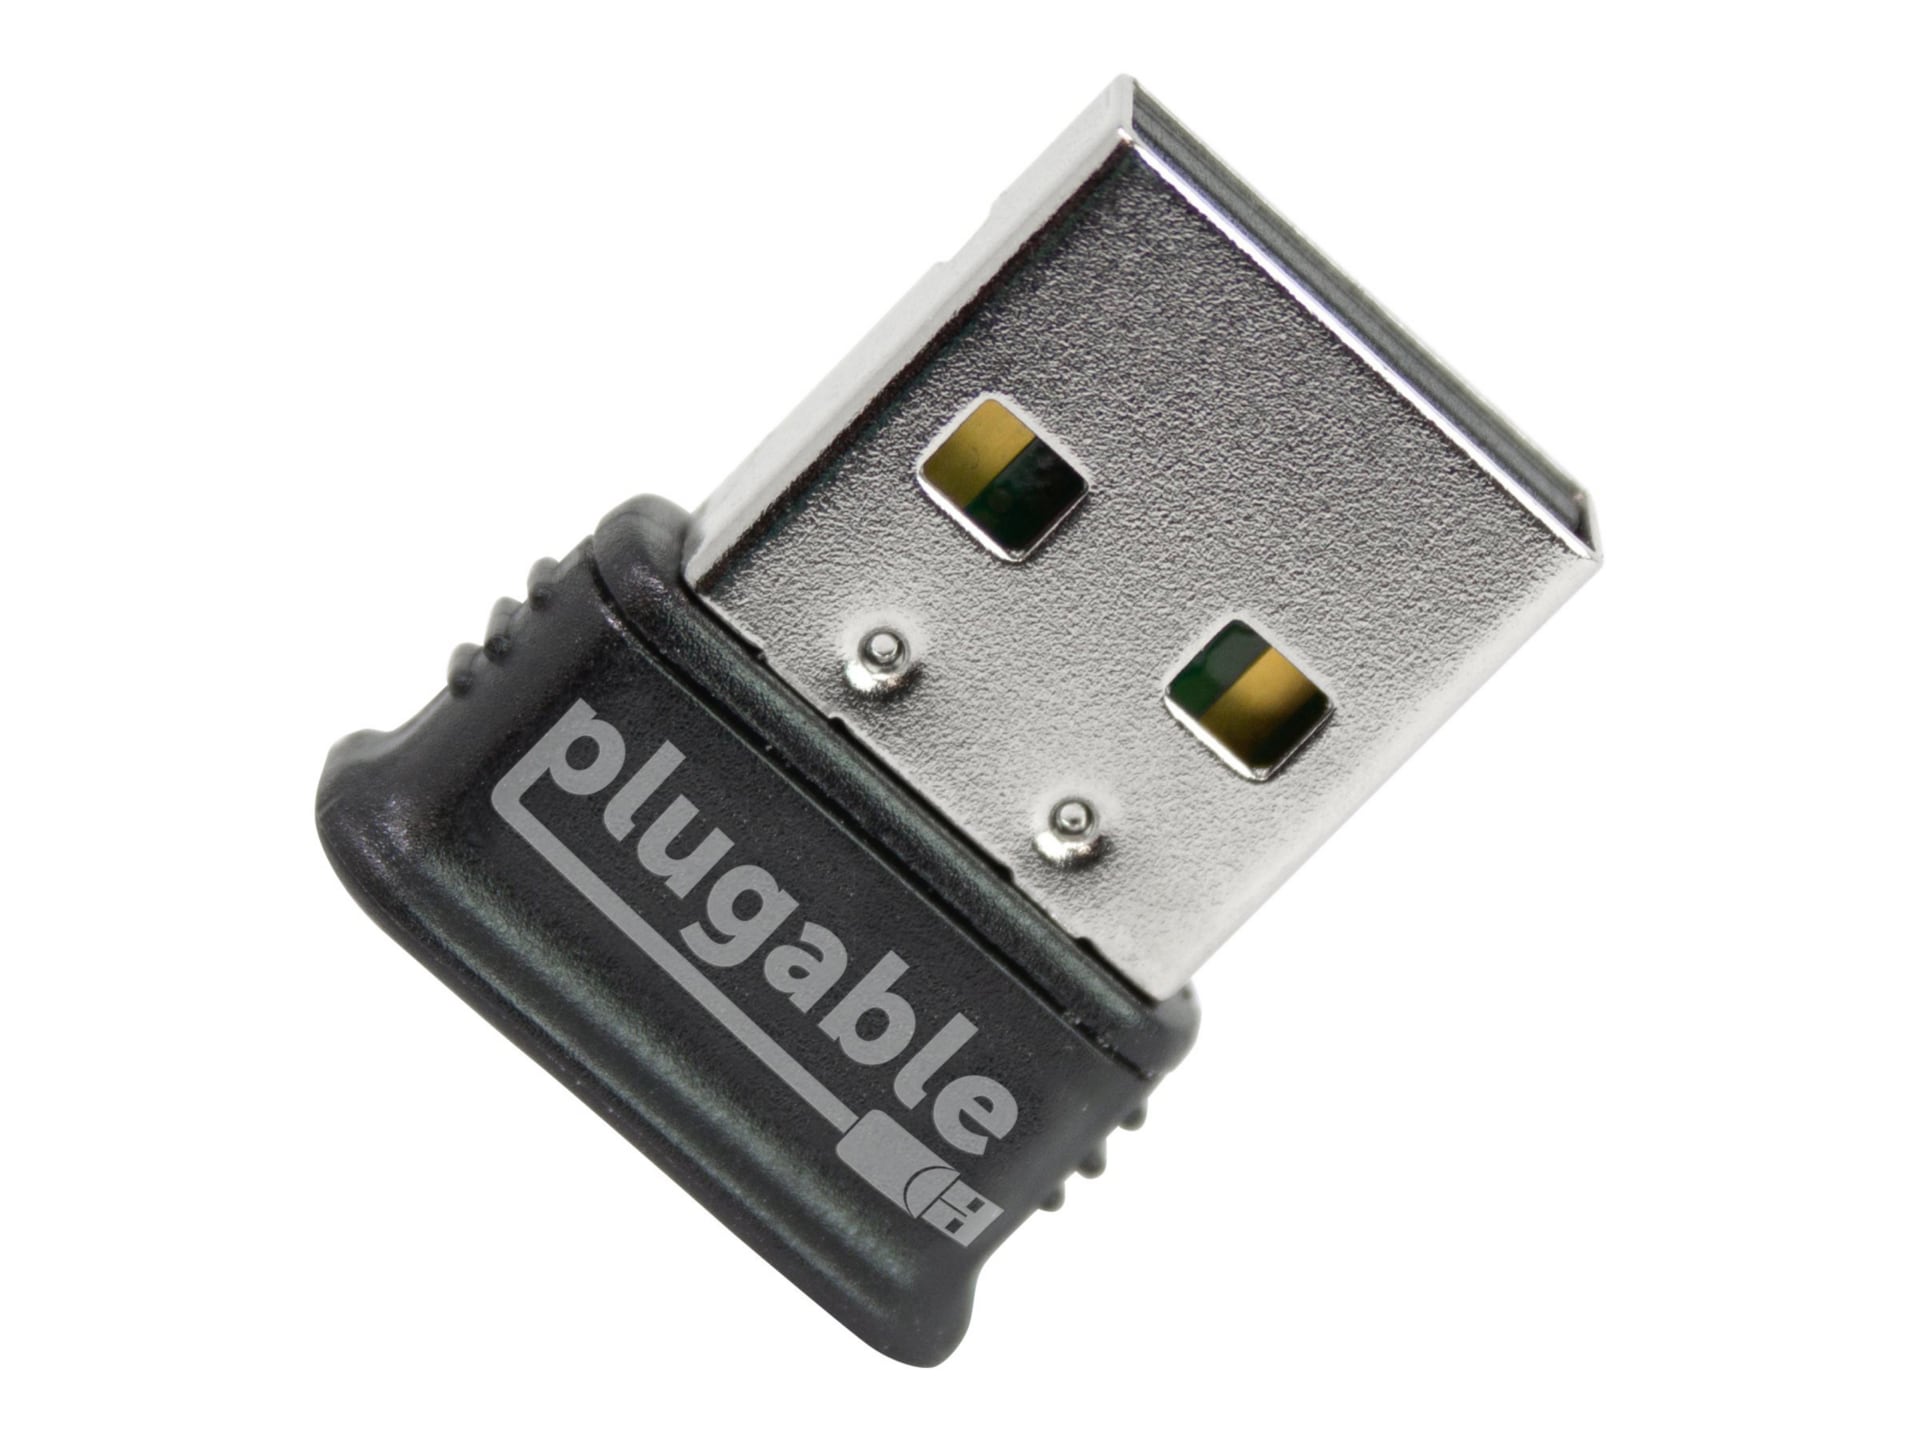 Plugable - network adapter - USB 2.0